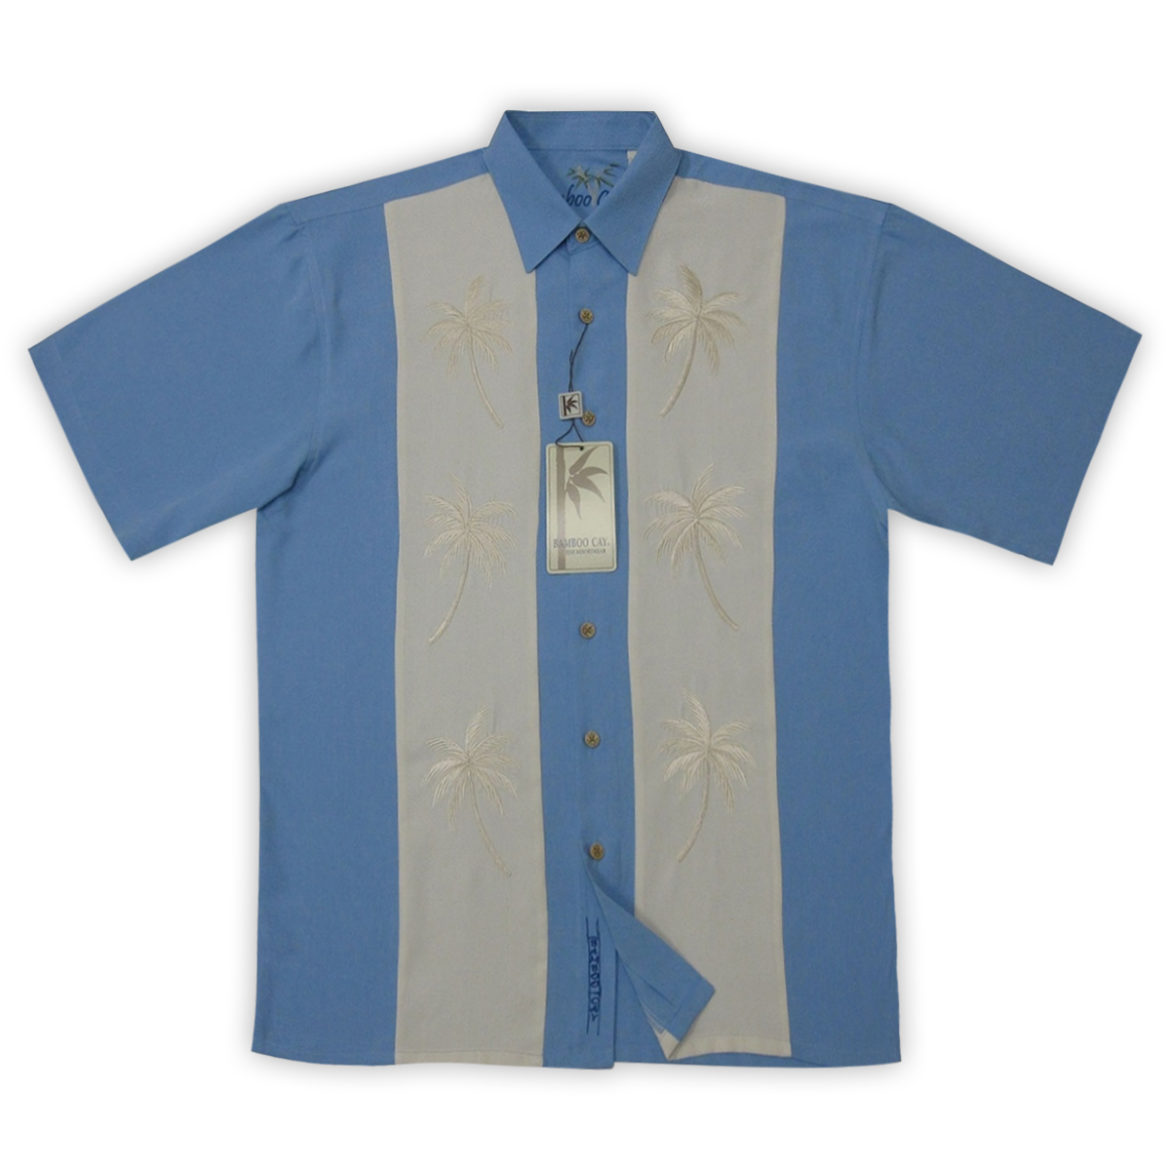 Bamboo Cay Men's Shirt - Pacific Palms - Electro Sky Blue & Cream